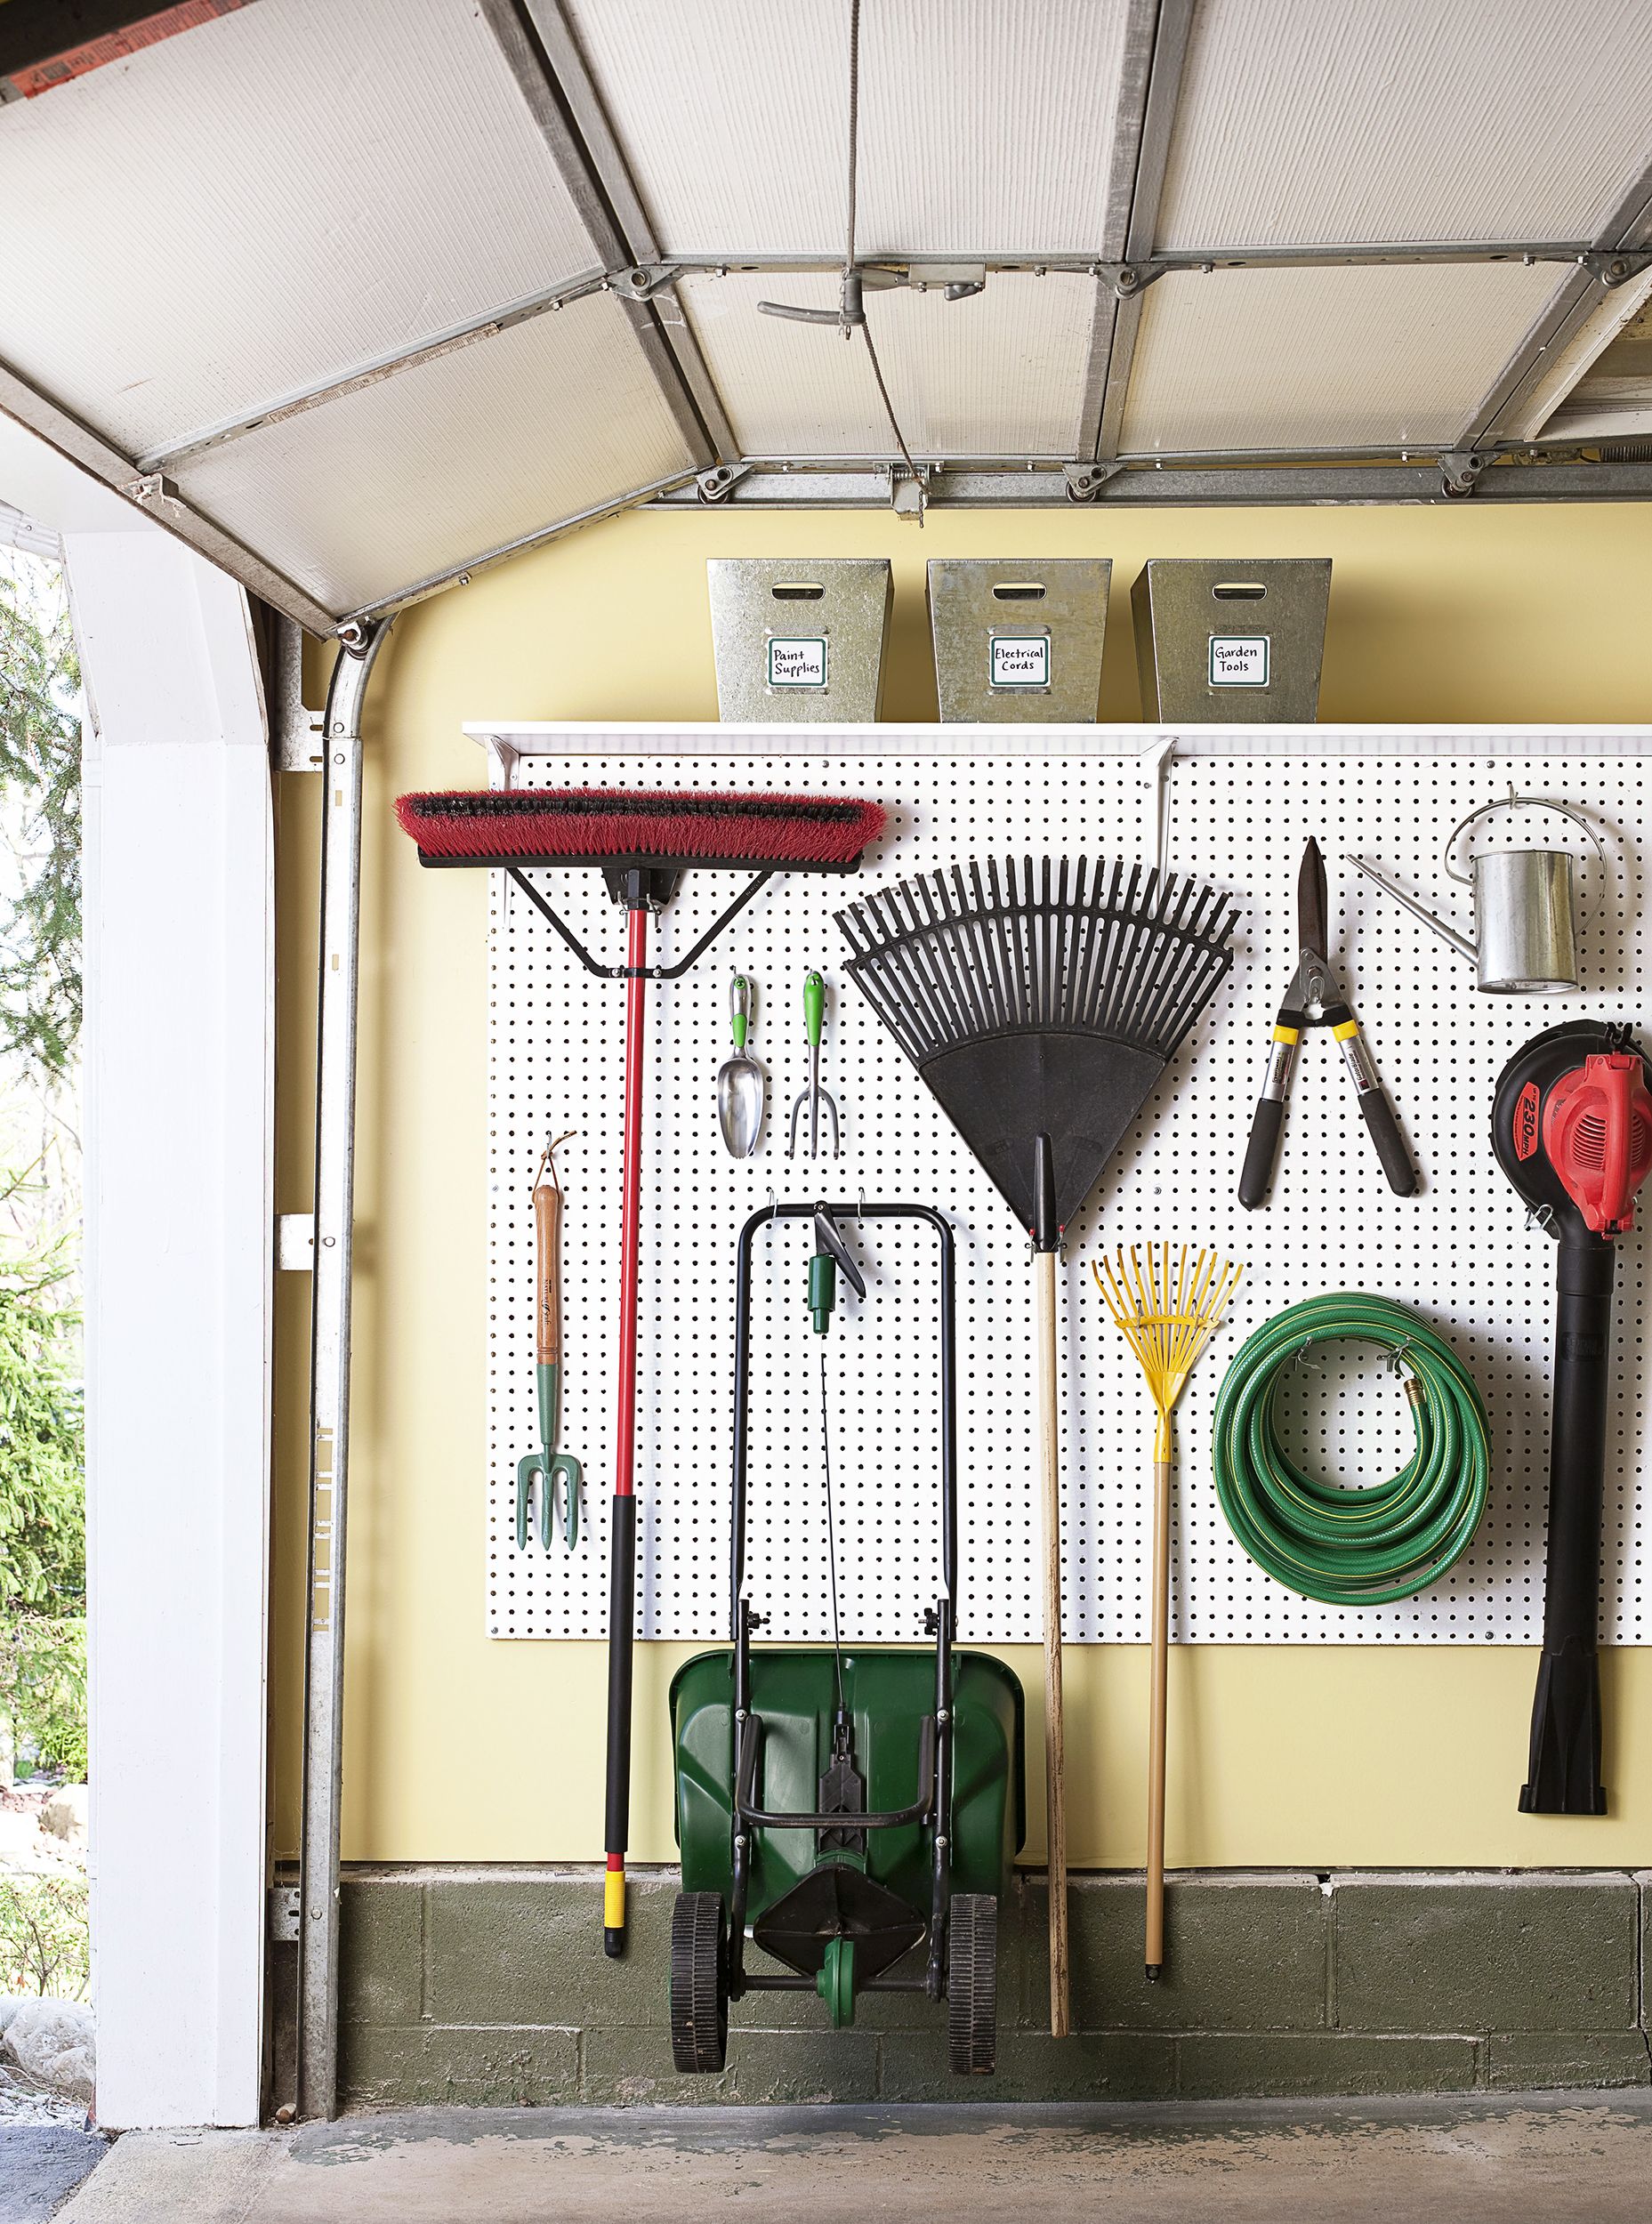 25 Smart Garage Organization Ideas - Garage Storage and Shelving Tips